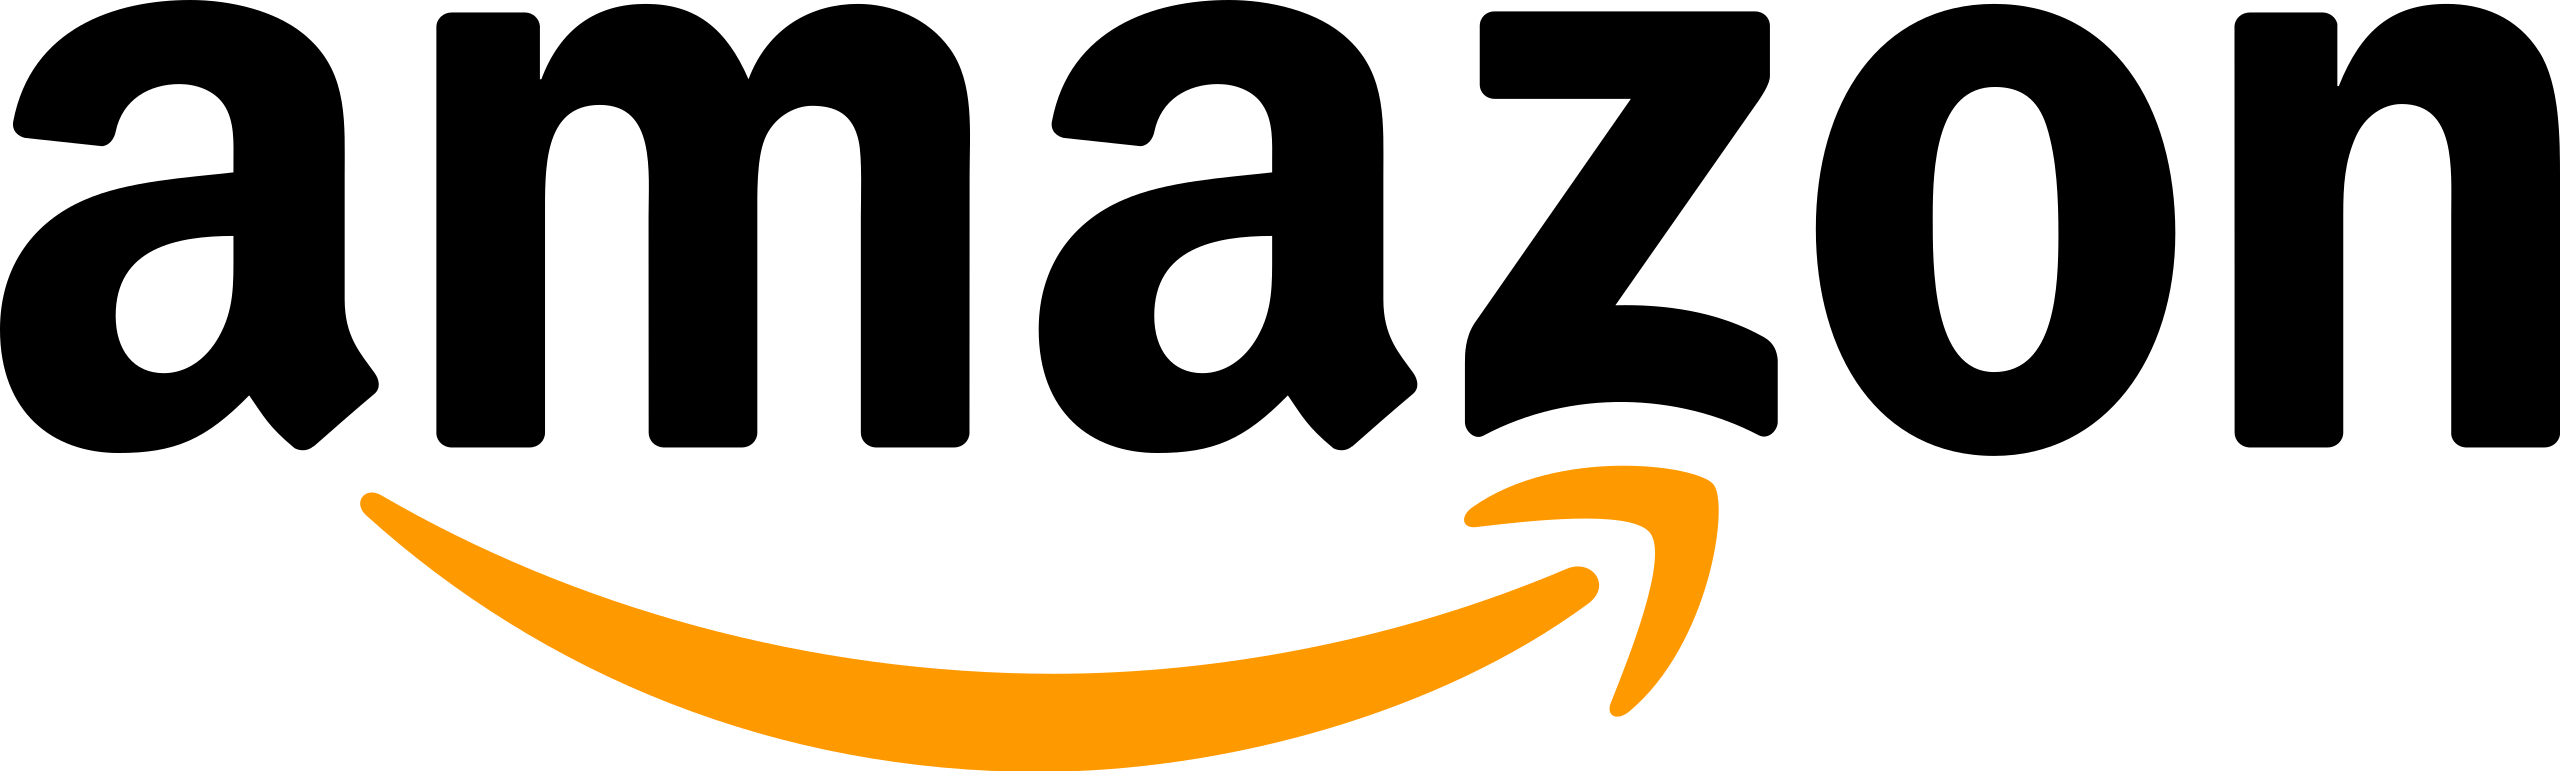 2560px-Amazon_logo.svg